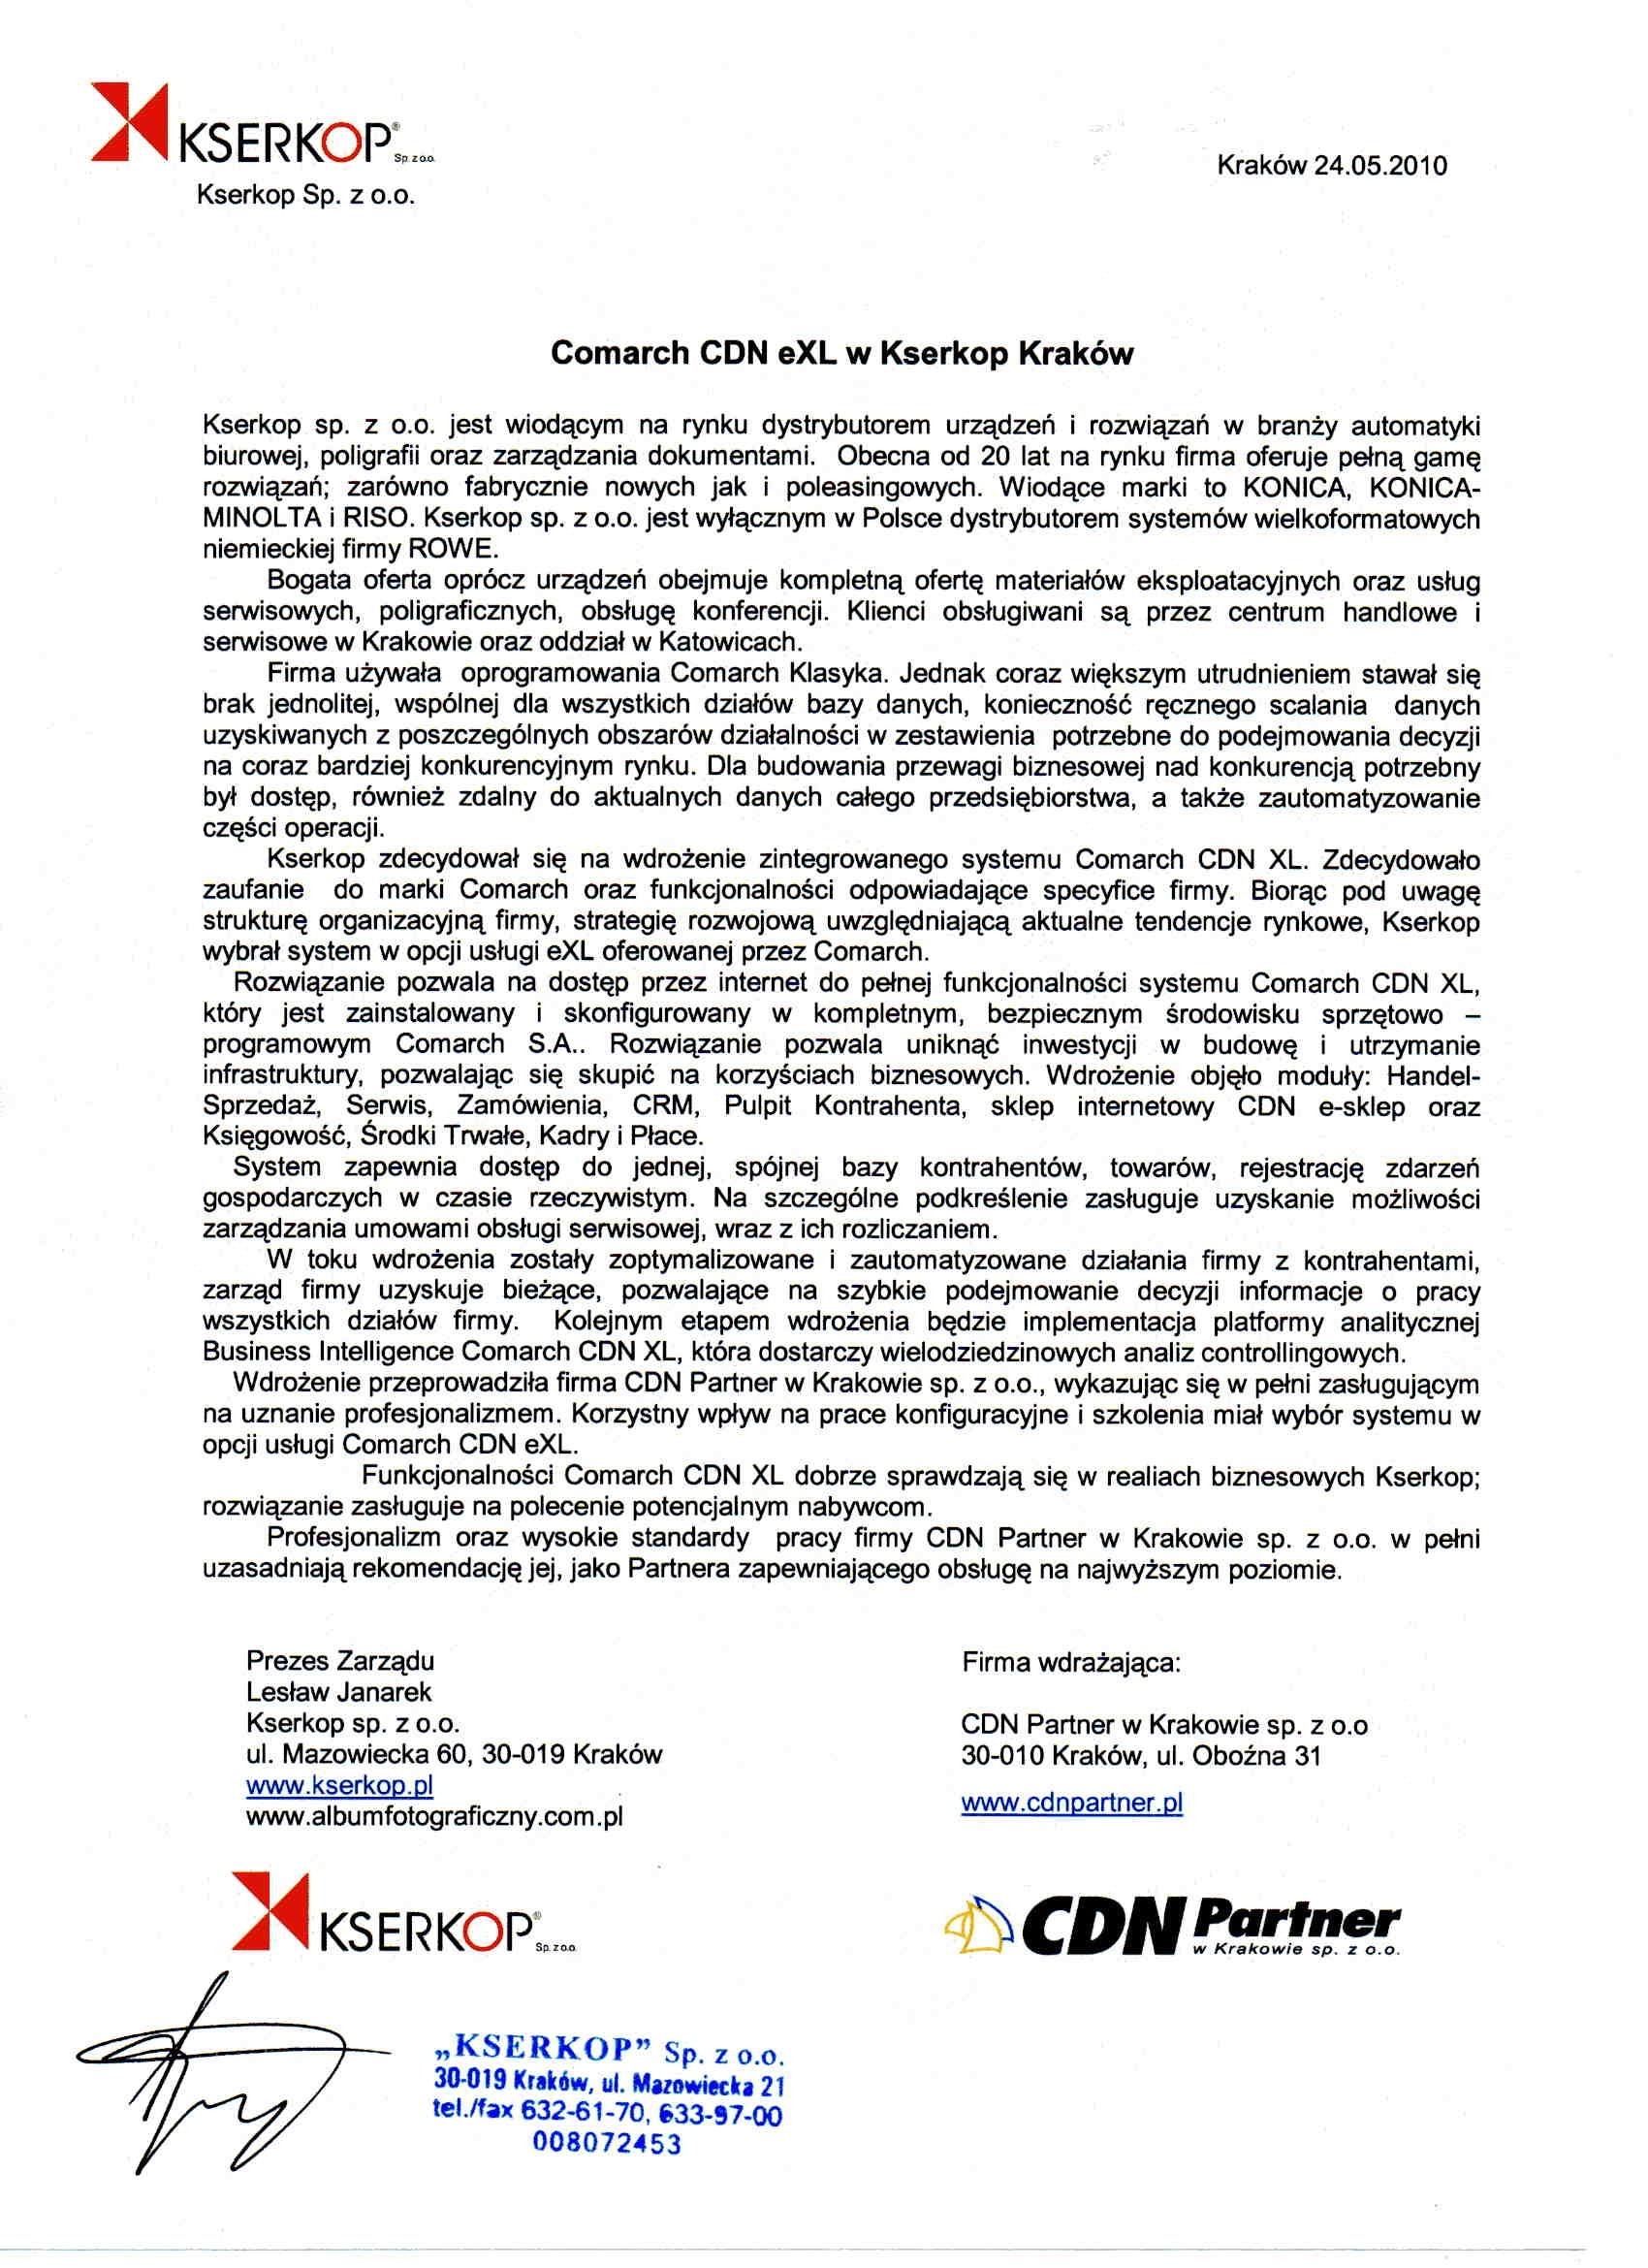 Referencje Kserkop dla CDN-Partner